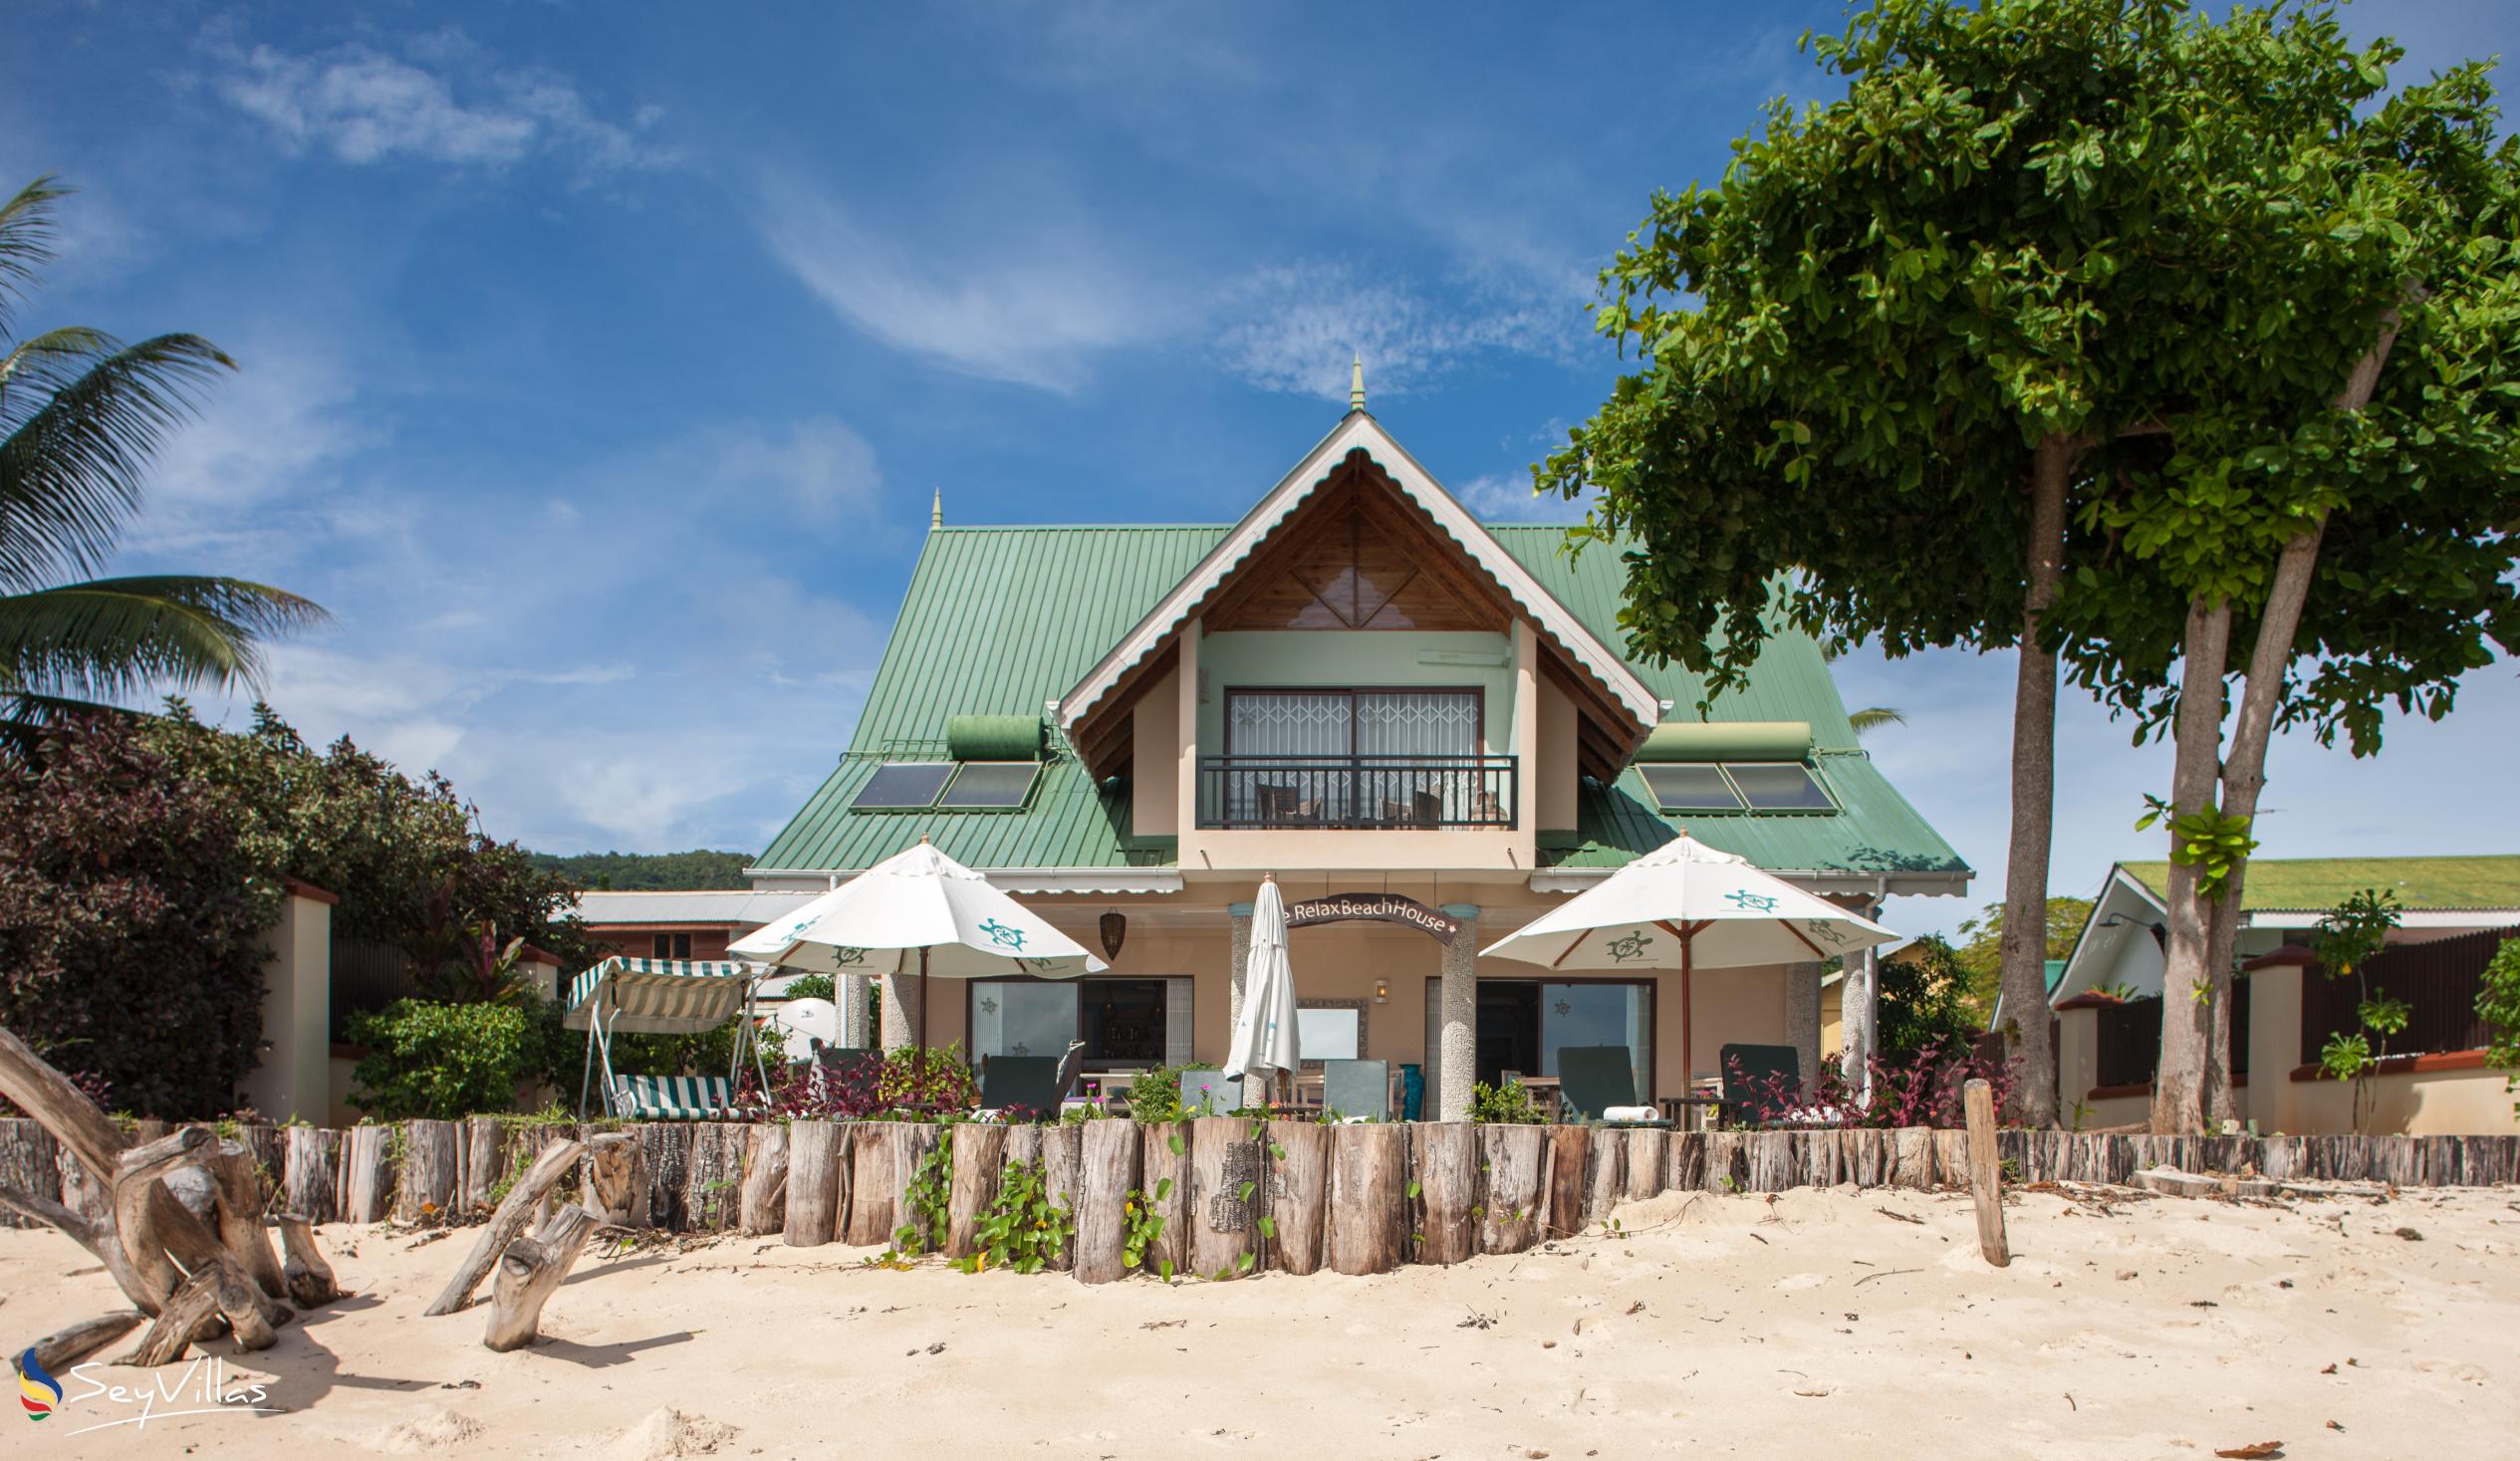 Photo 1: Le Relax Beach House - Outdoor area - La Digue (Seychelles)